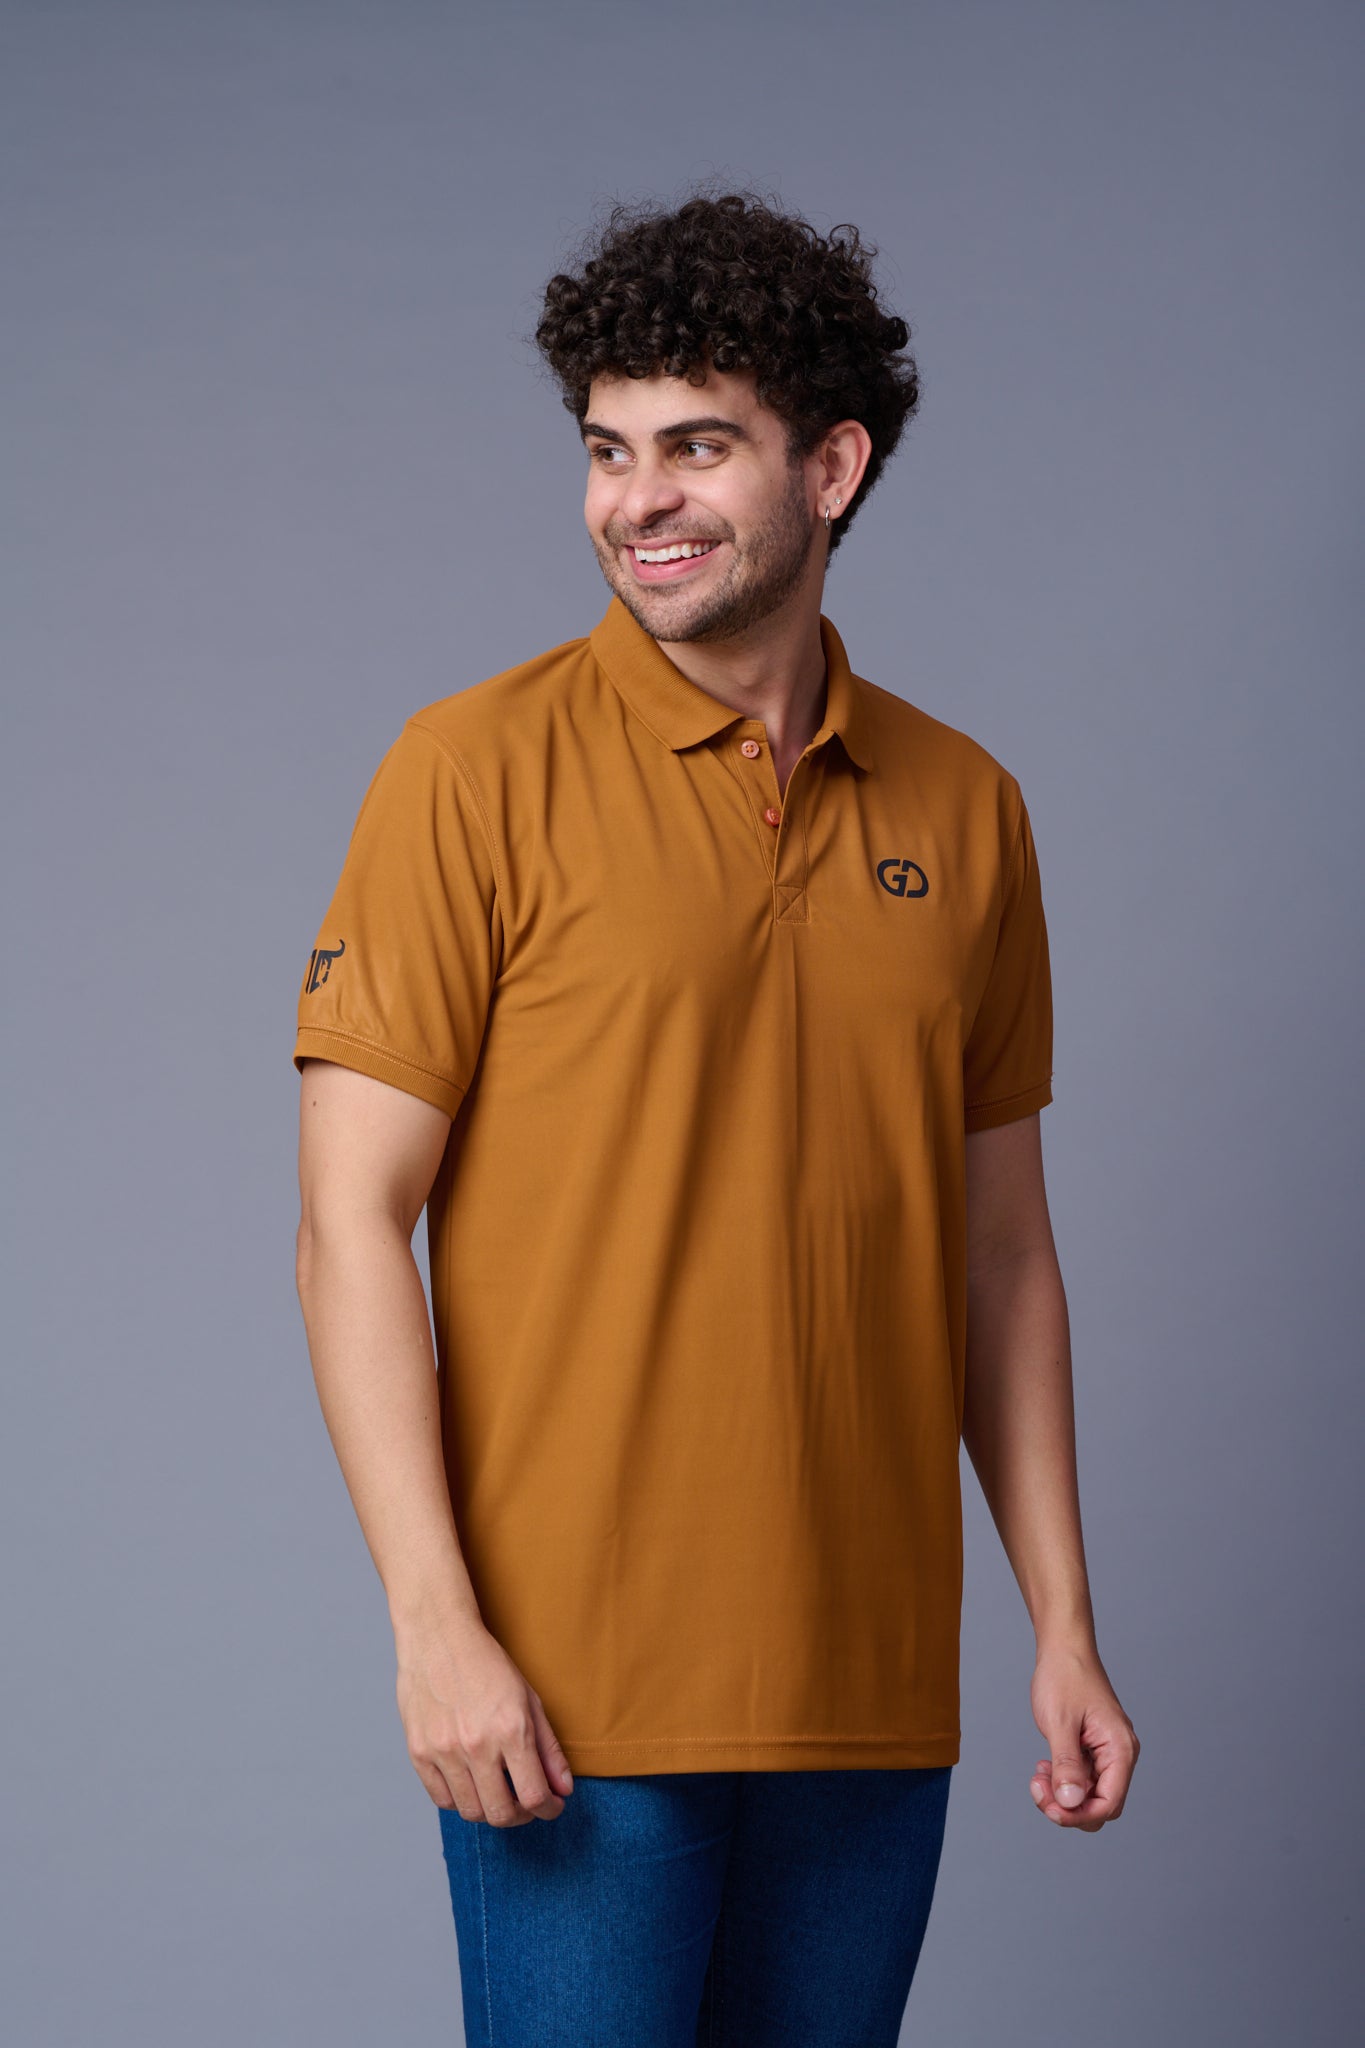 GD Logo Mustured Polo T-Shirt for Men